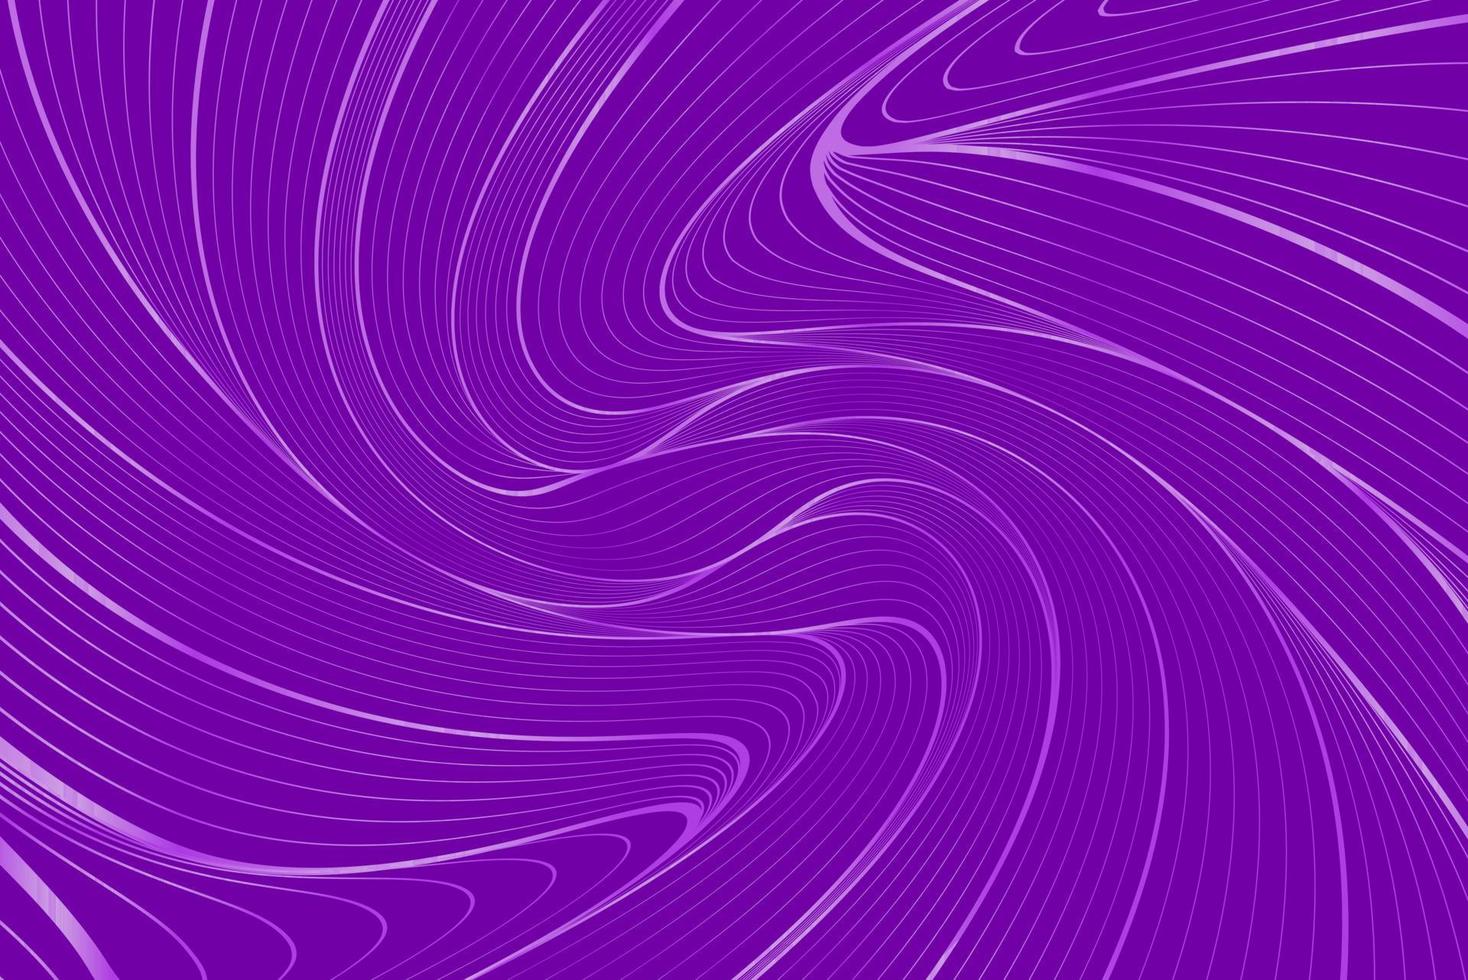 fondo abstracto de onda púrpura. vector de eps10 de composición de formas dinámicas